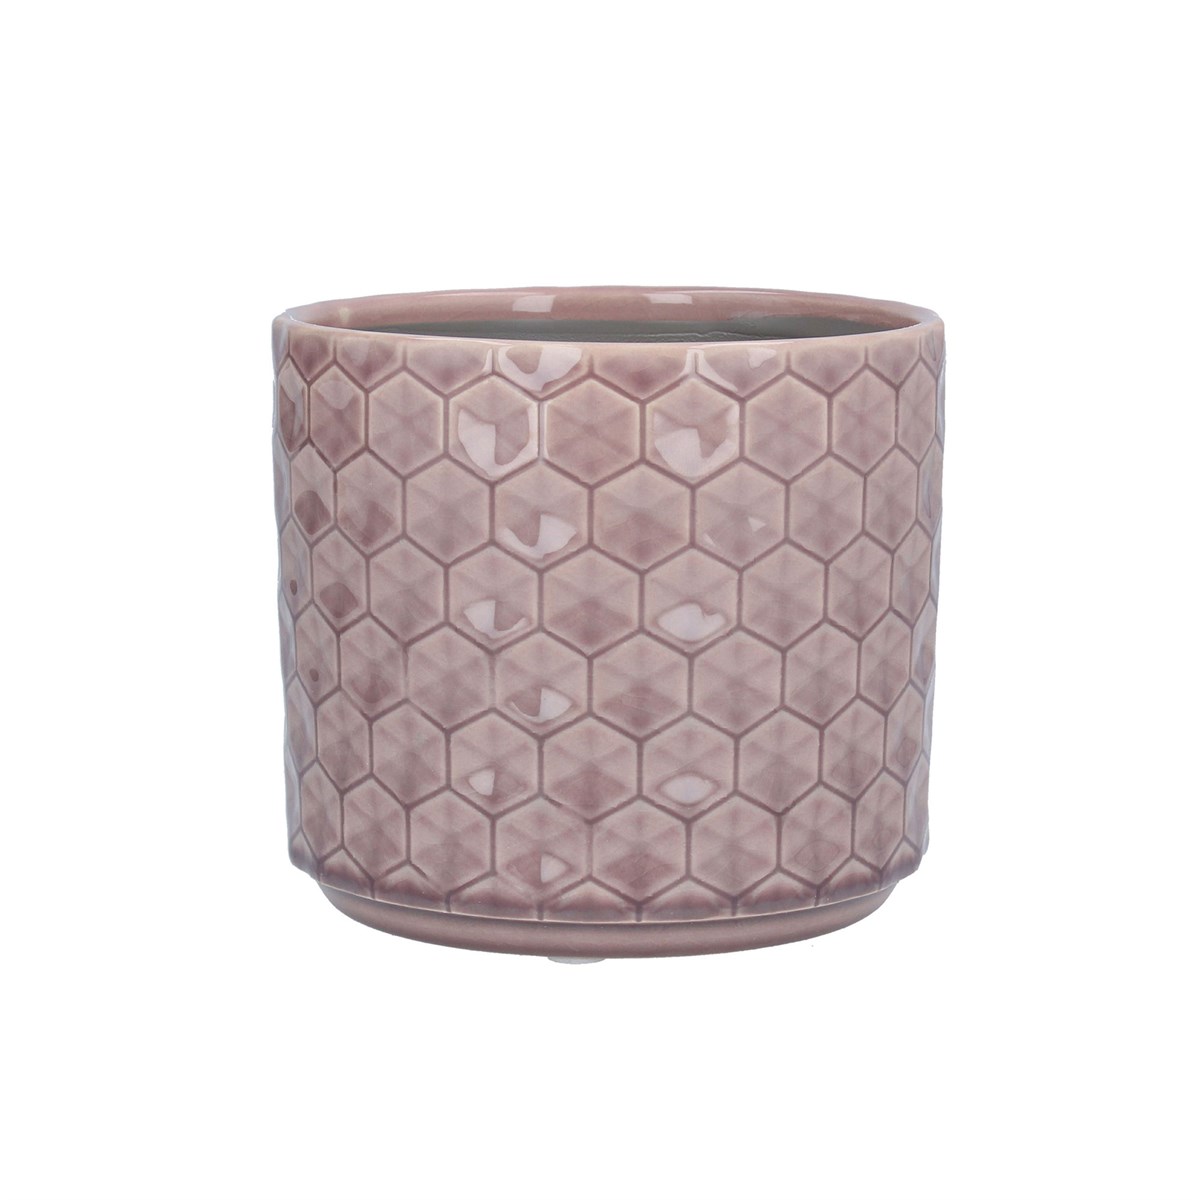 Gisela Graham Dusky Mauve Honeycomb Ceramic Pot Cover, Small